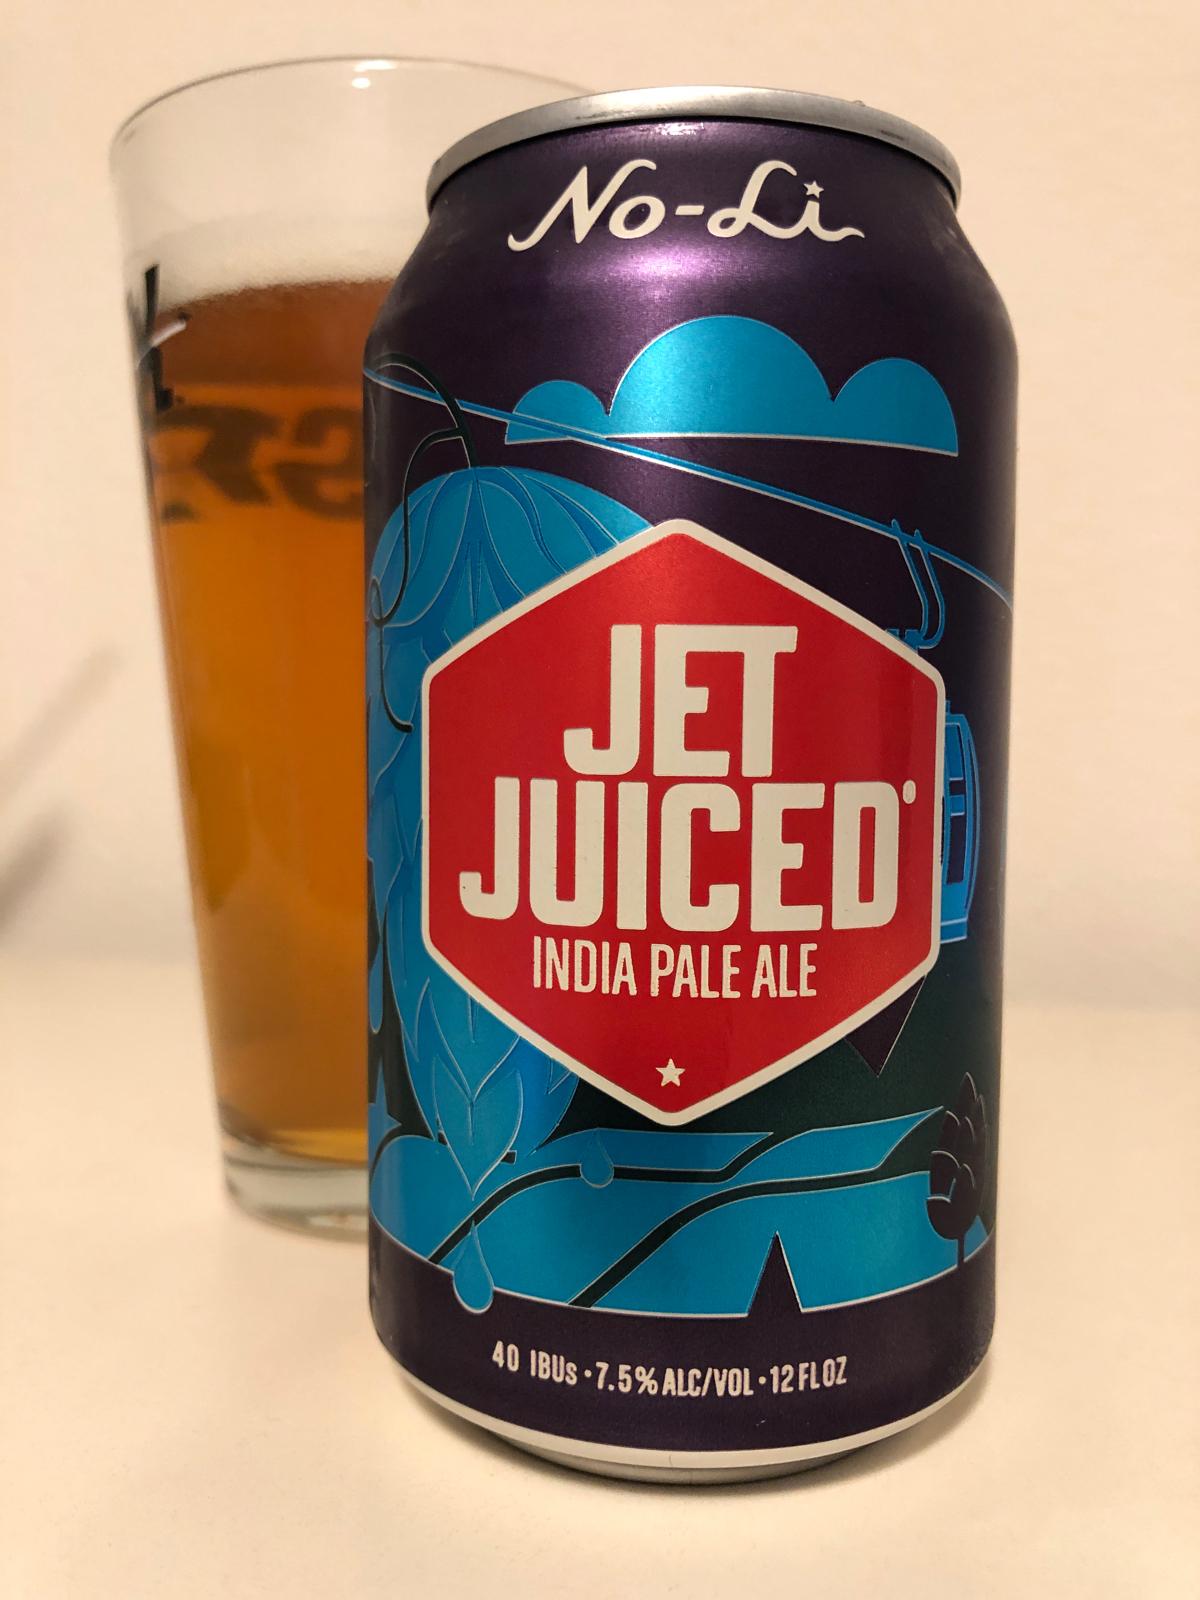 Jet Juiced